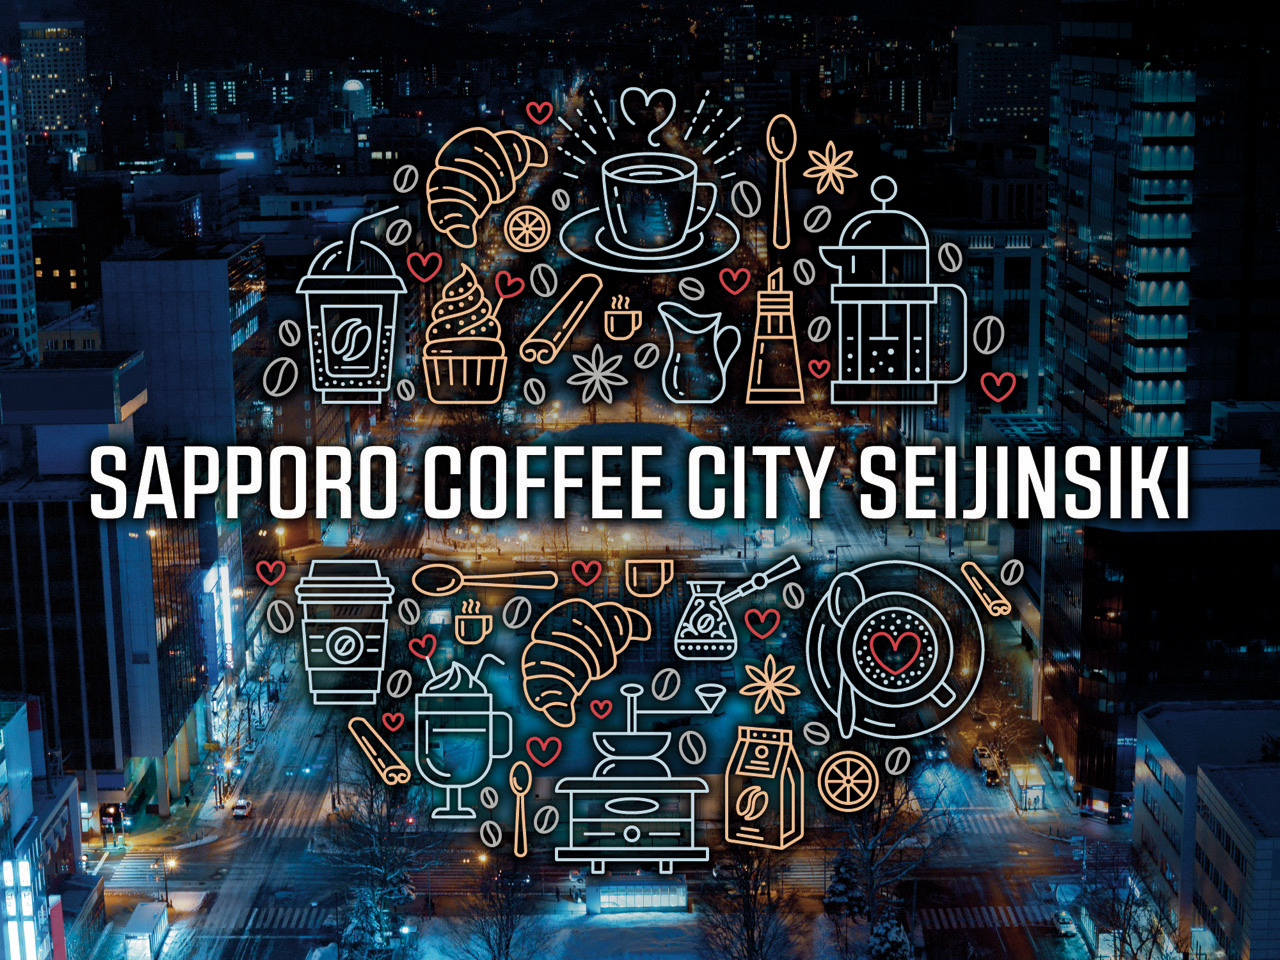 2021.01.11 〜 2021.01.31「SAPPORO COFFEE CITY SEIJINSIKI」